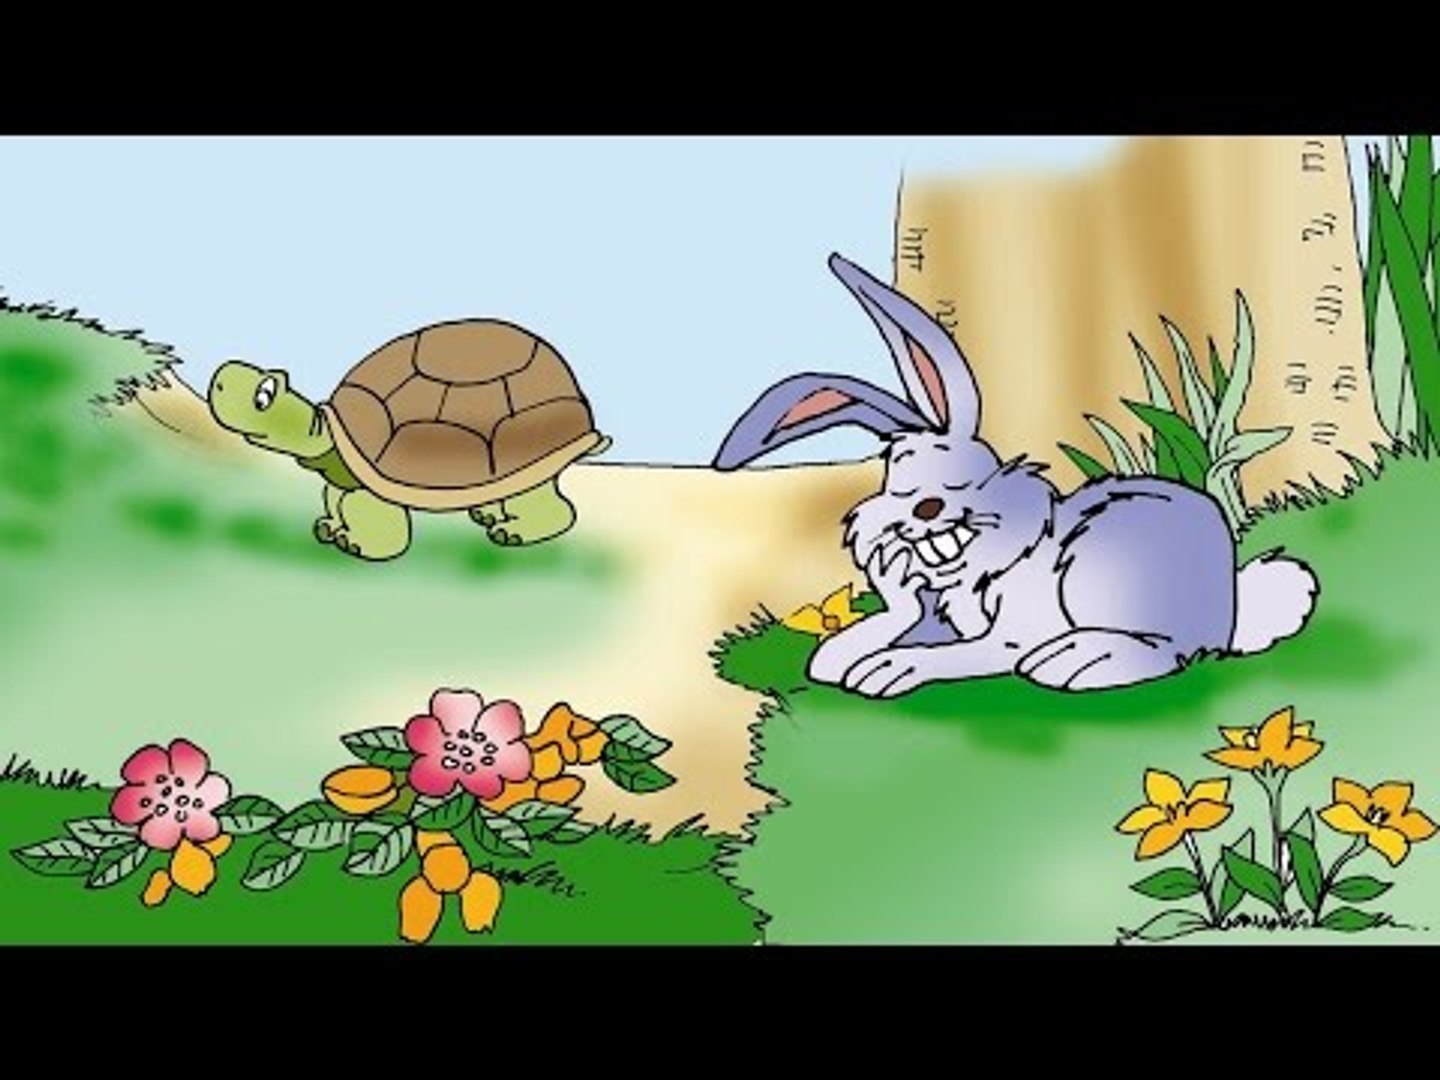 Заяц и черепаха 4 класс. Заяц и черепаха. Заяц и черепаха картинка. Иллюстрация к сказке заяц и черепаха. Кролик и черепаха.